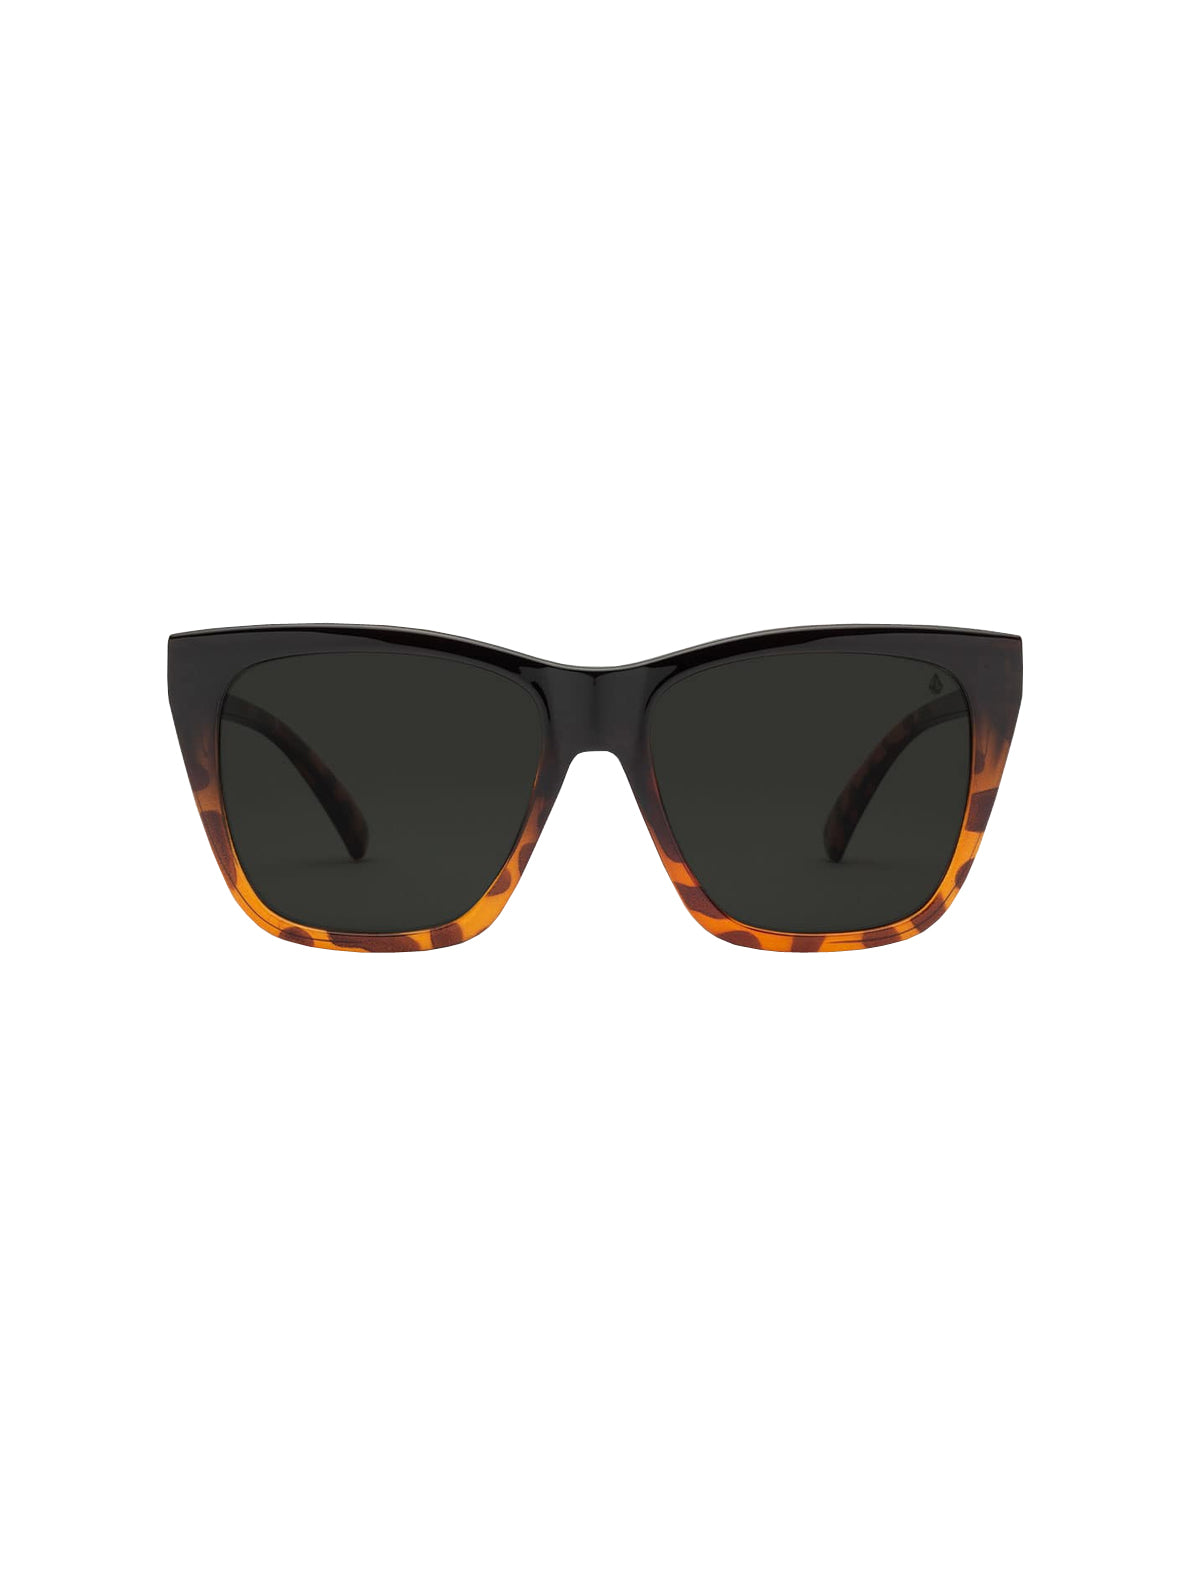 Volcom LookyLou Polarized Sunglasses GlossDarkside GrayPolar